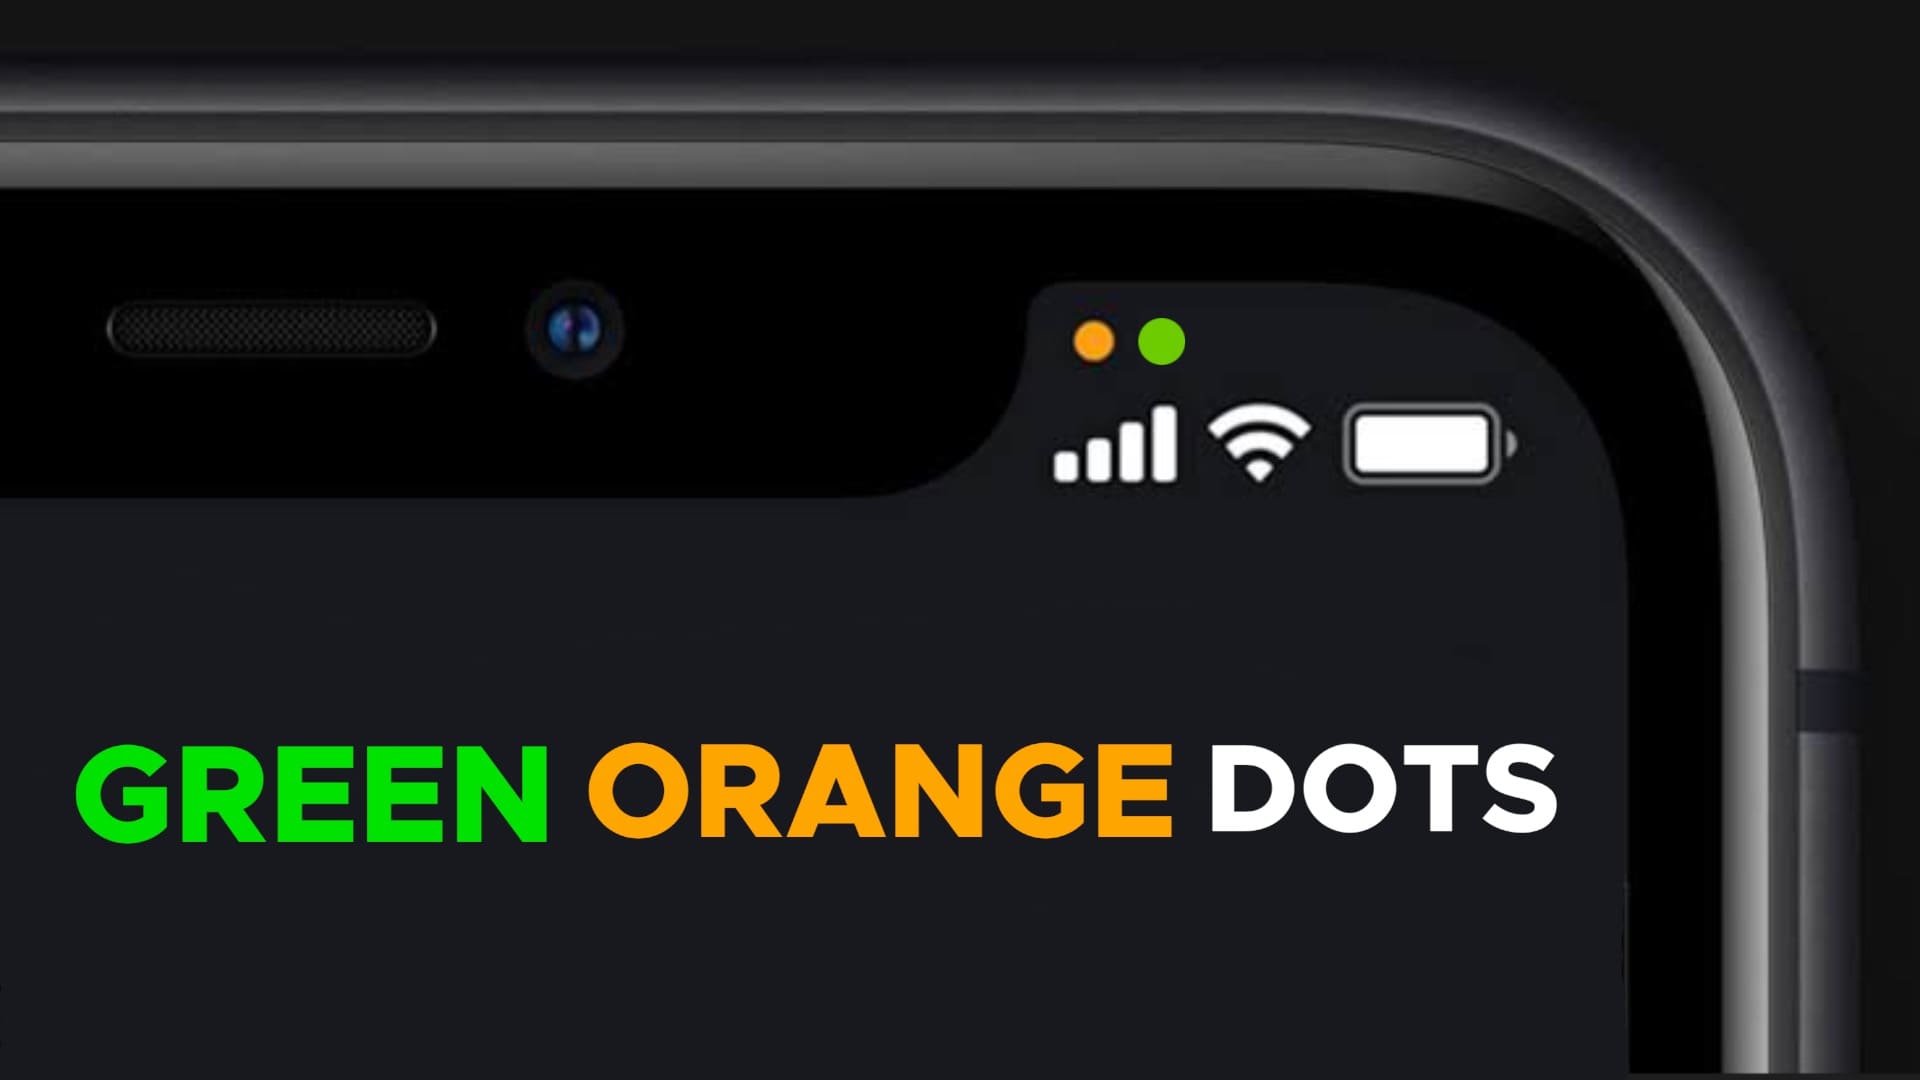 iPhone's Orange Dot or Green